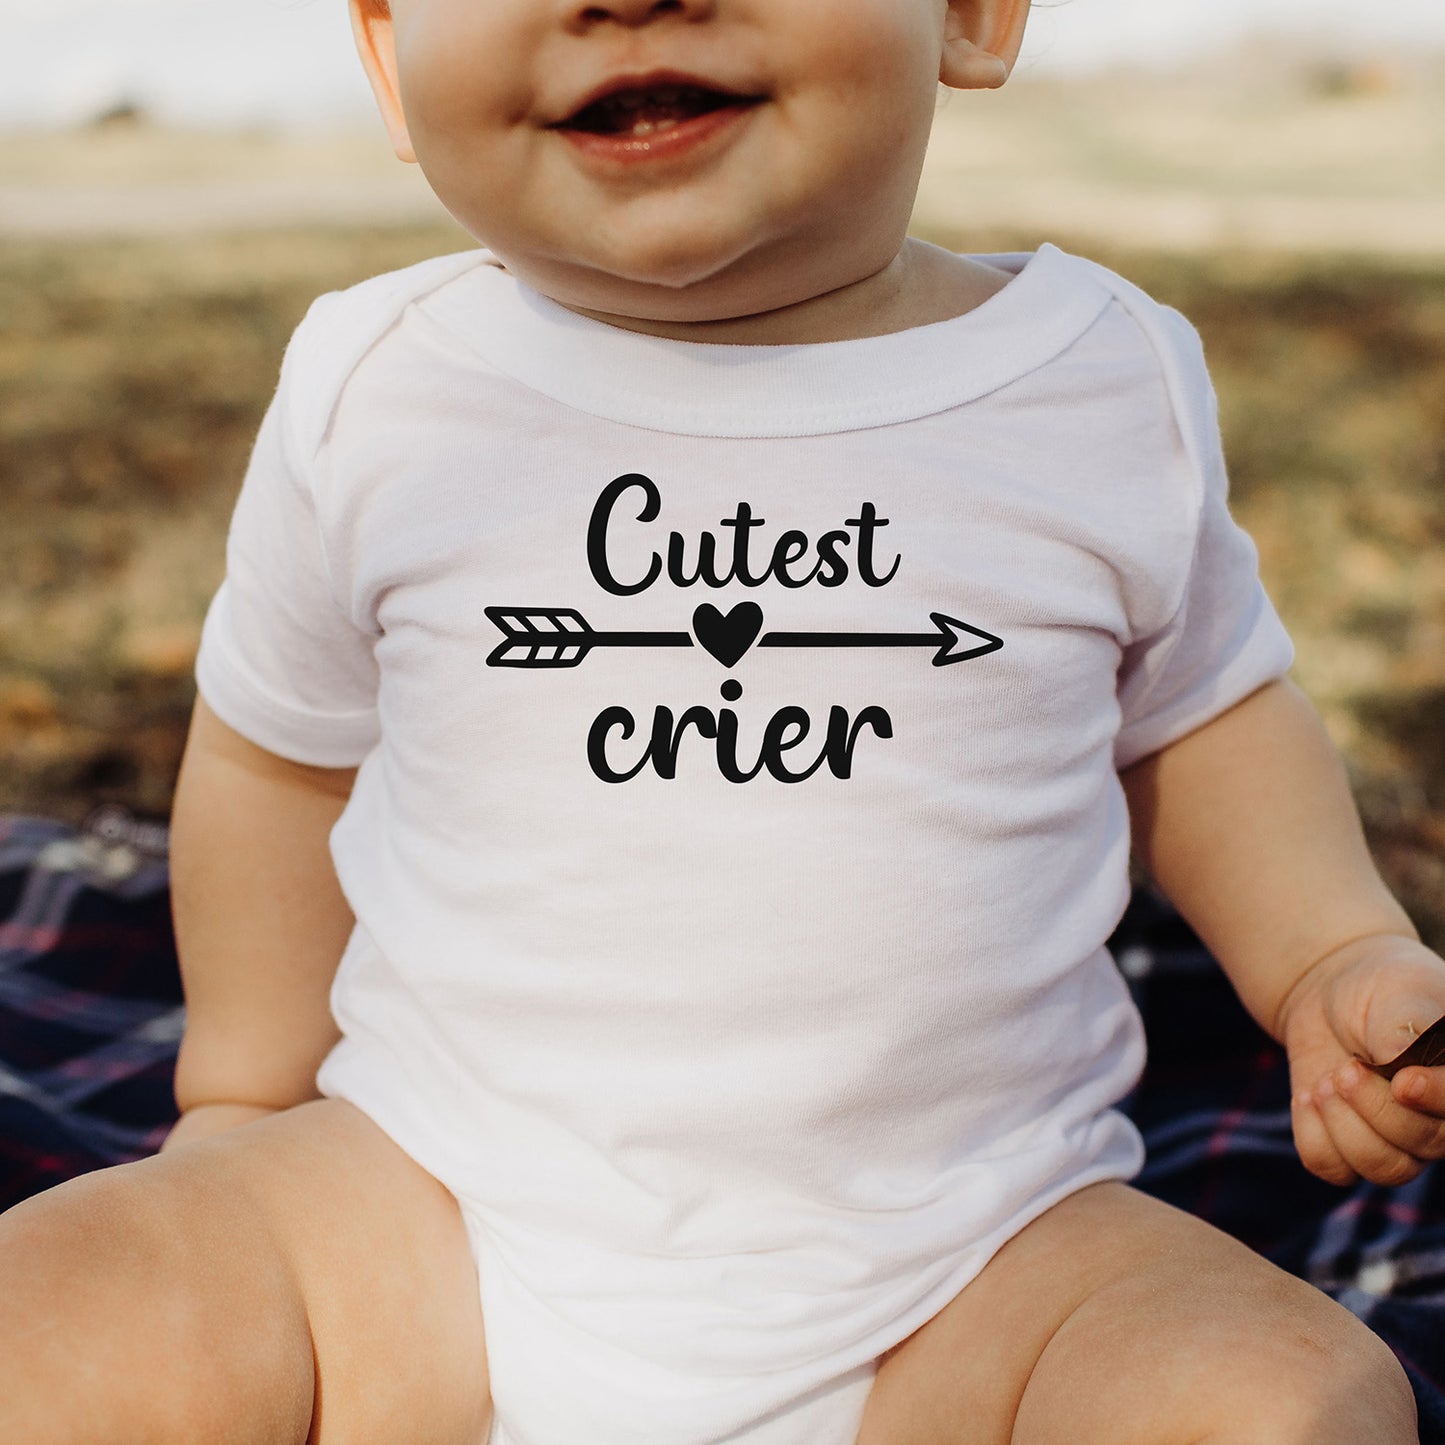 "Cutest Crier" Graphic